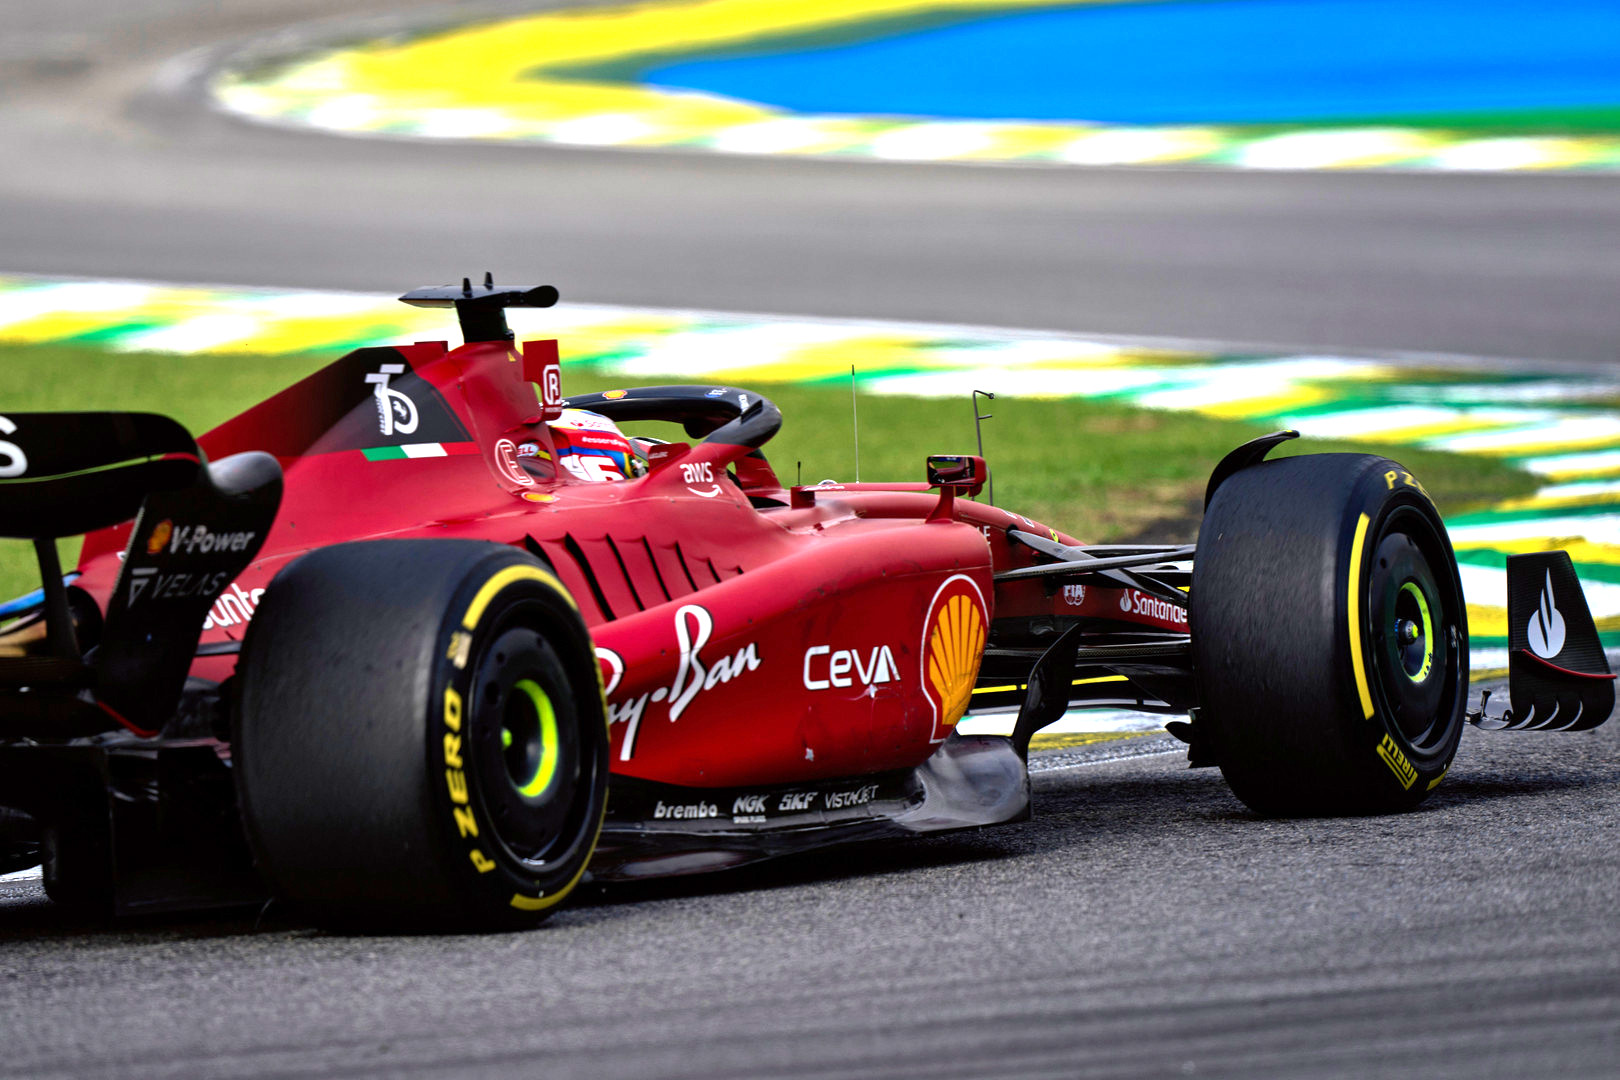 Watch Live: Ferrari launches new F1-75 car for 2022 season